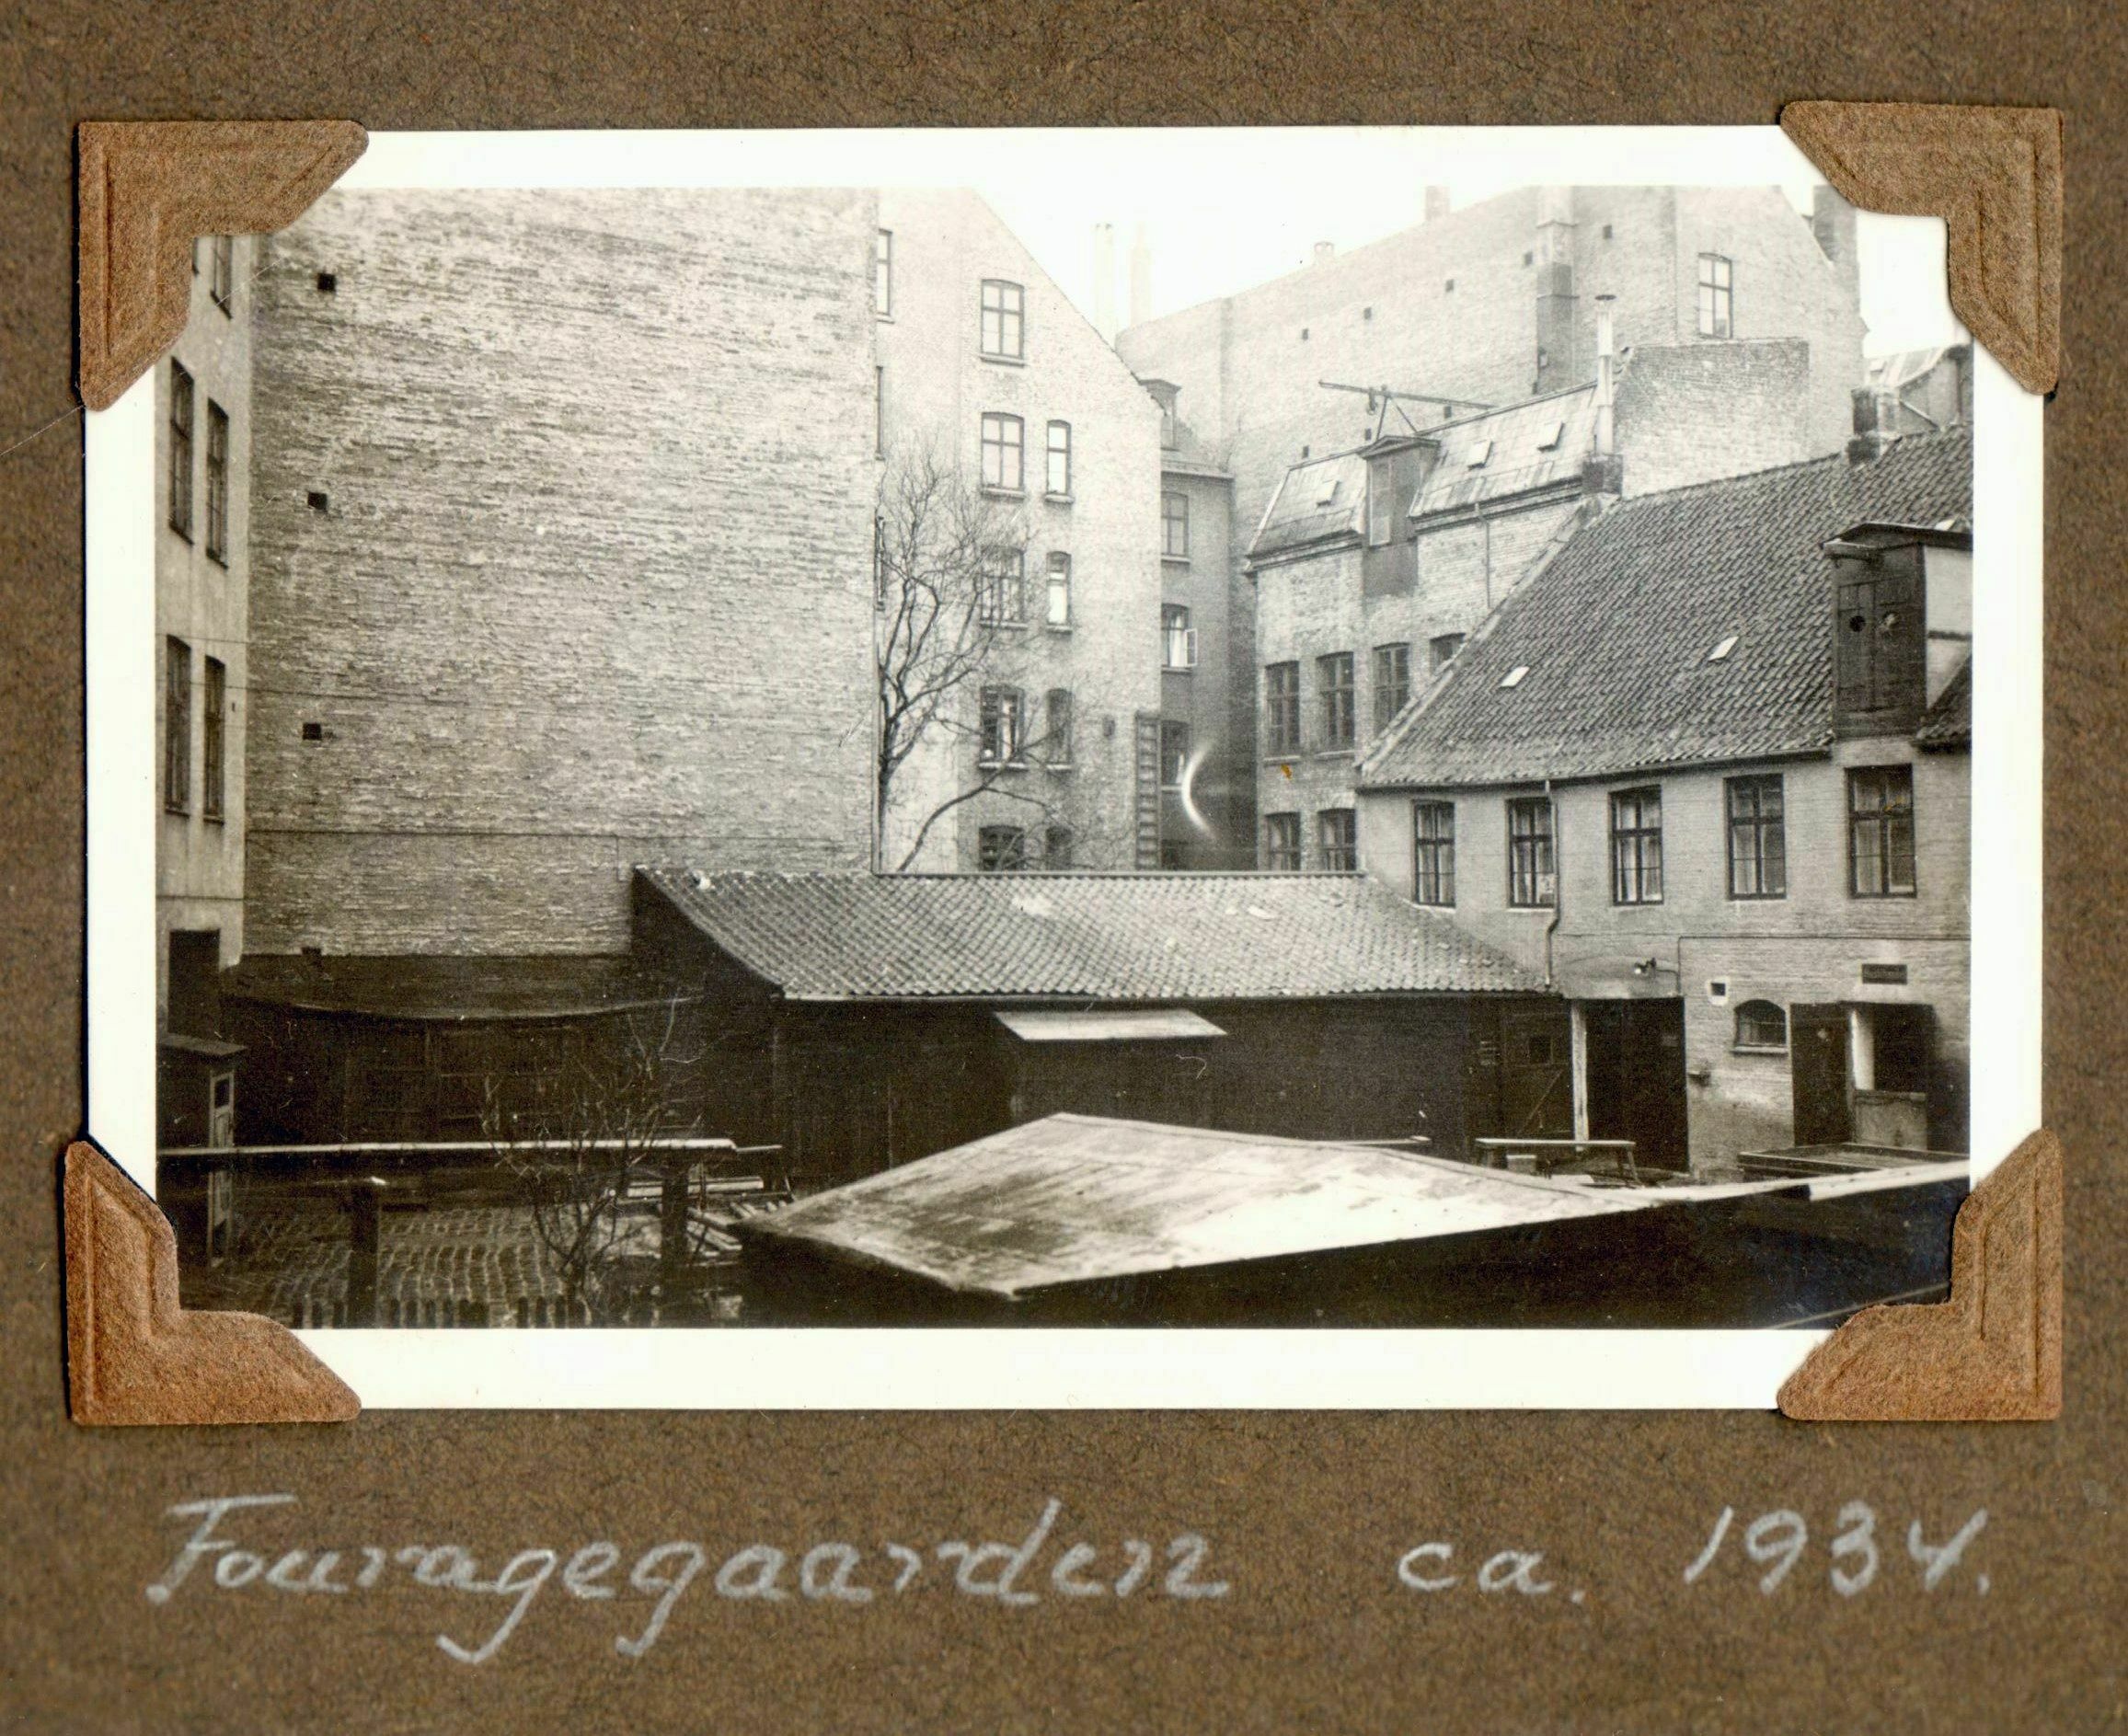 70.89 Fouragegaarden 1934